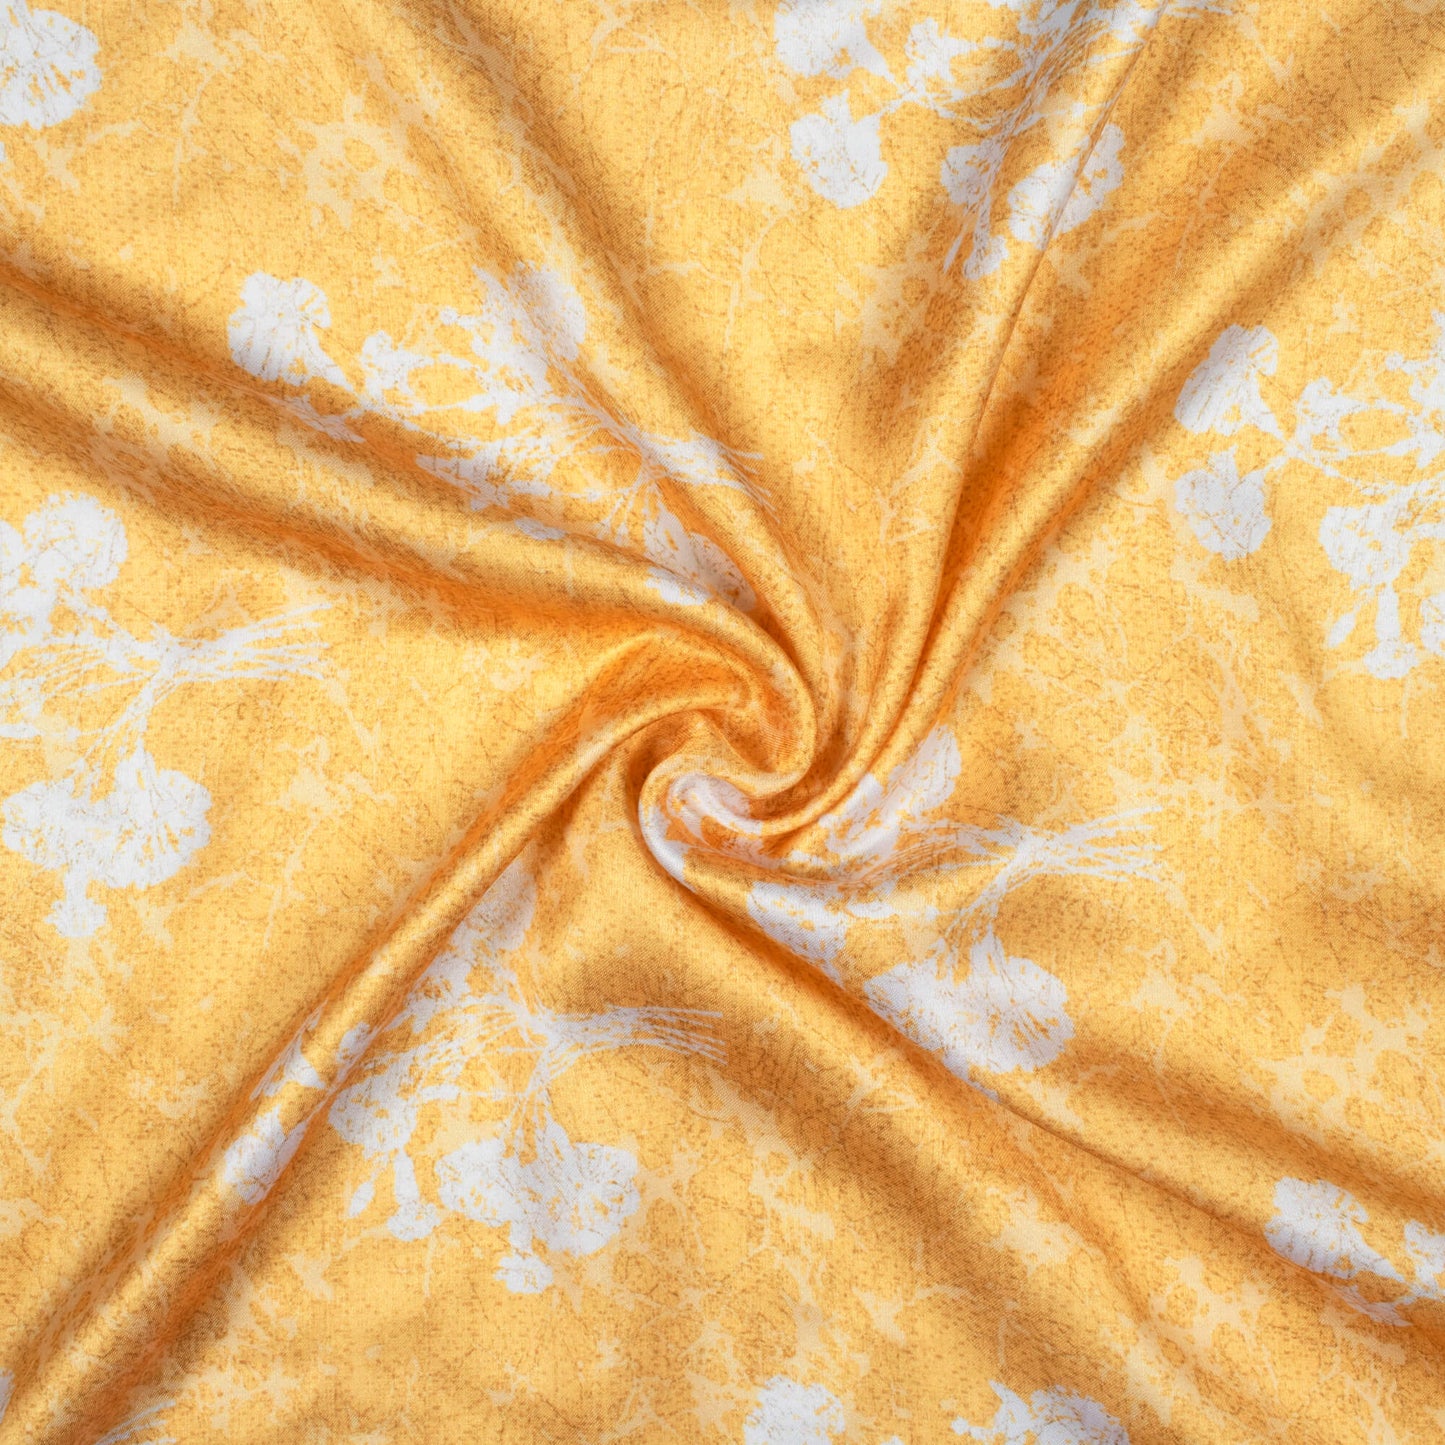 Trombone Yellow And White Floral Pattern Digital Print Premium Lush Satin Fabric